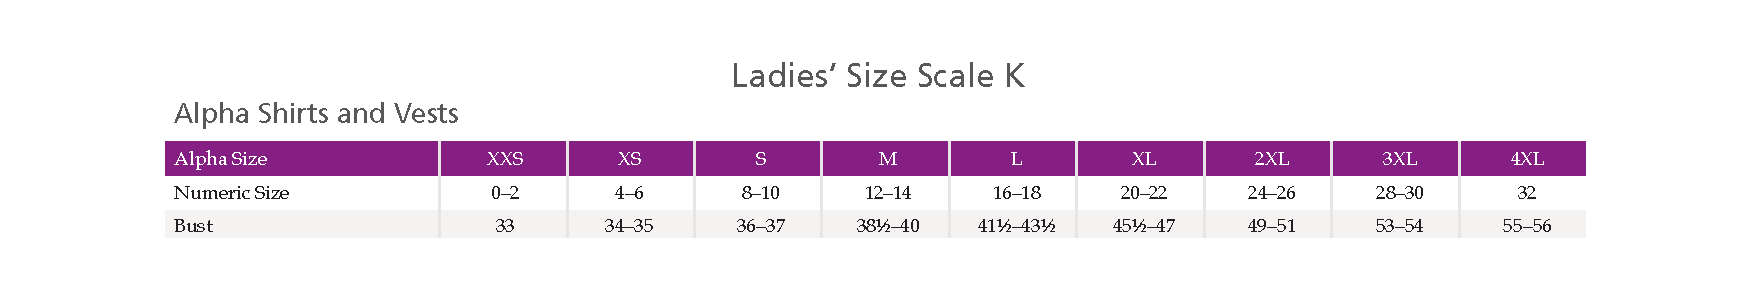 Size Scale K